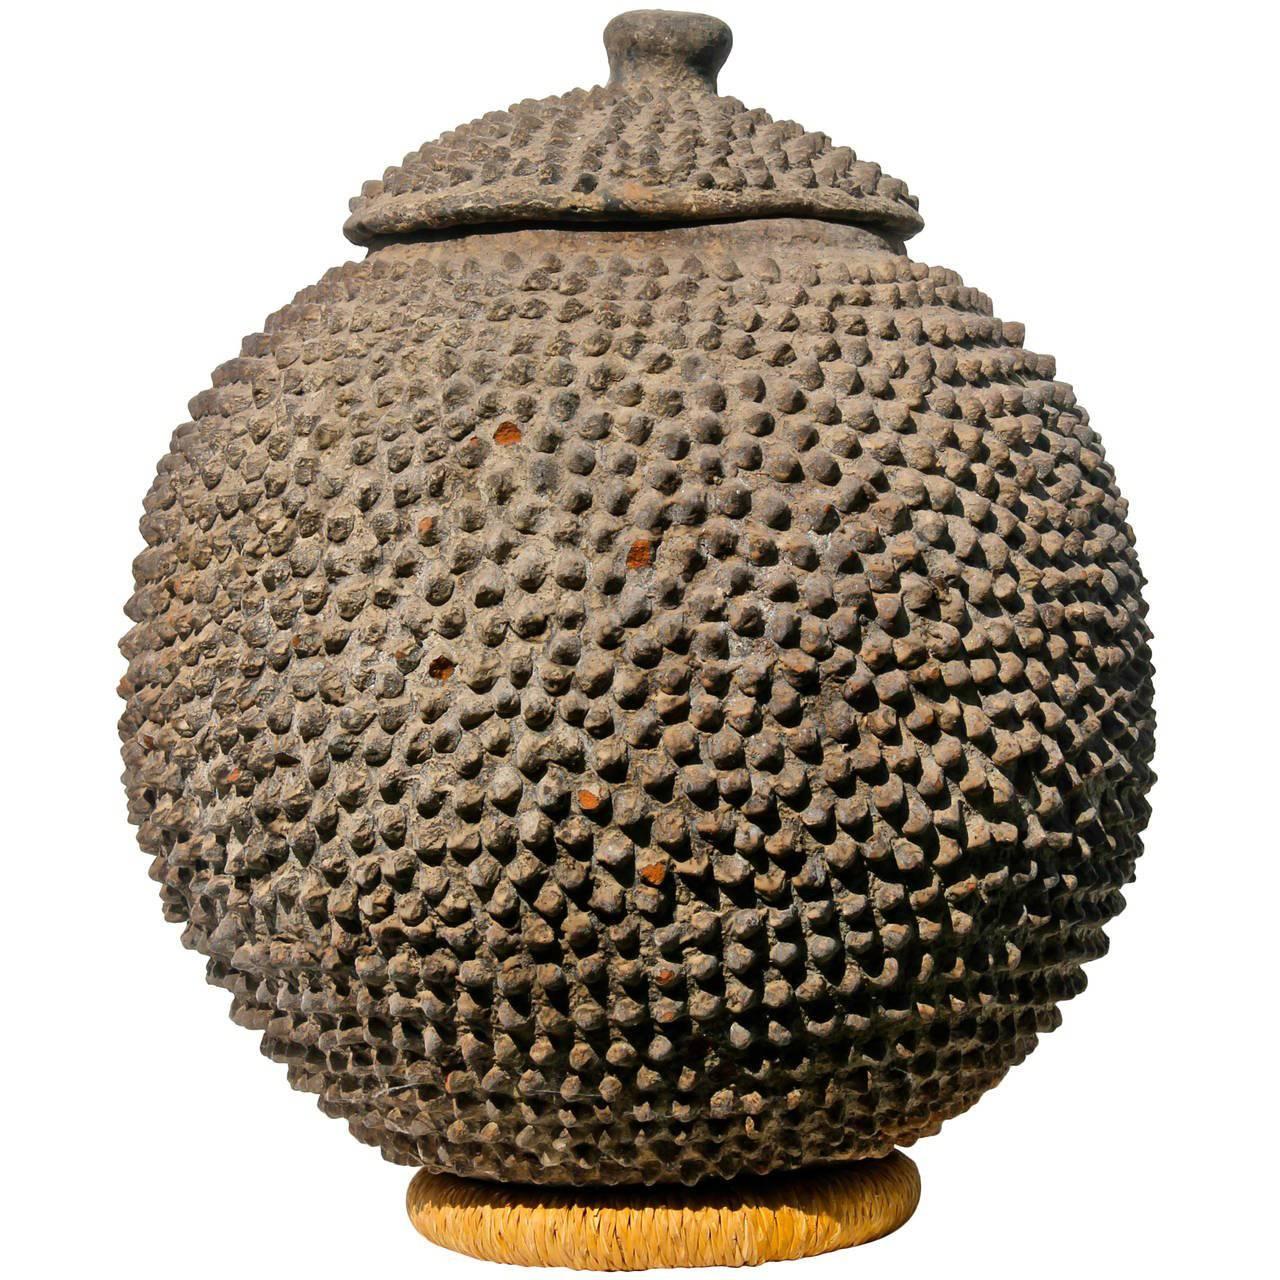 Lobi Terracotta Vessel, African Pottery